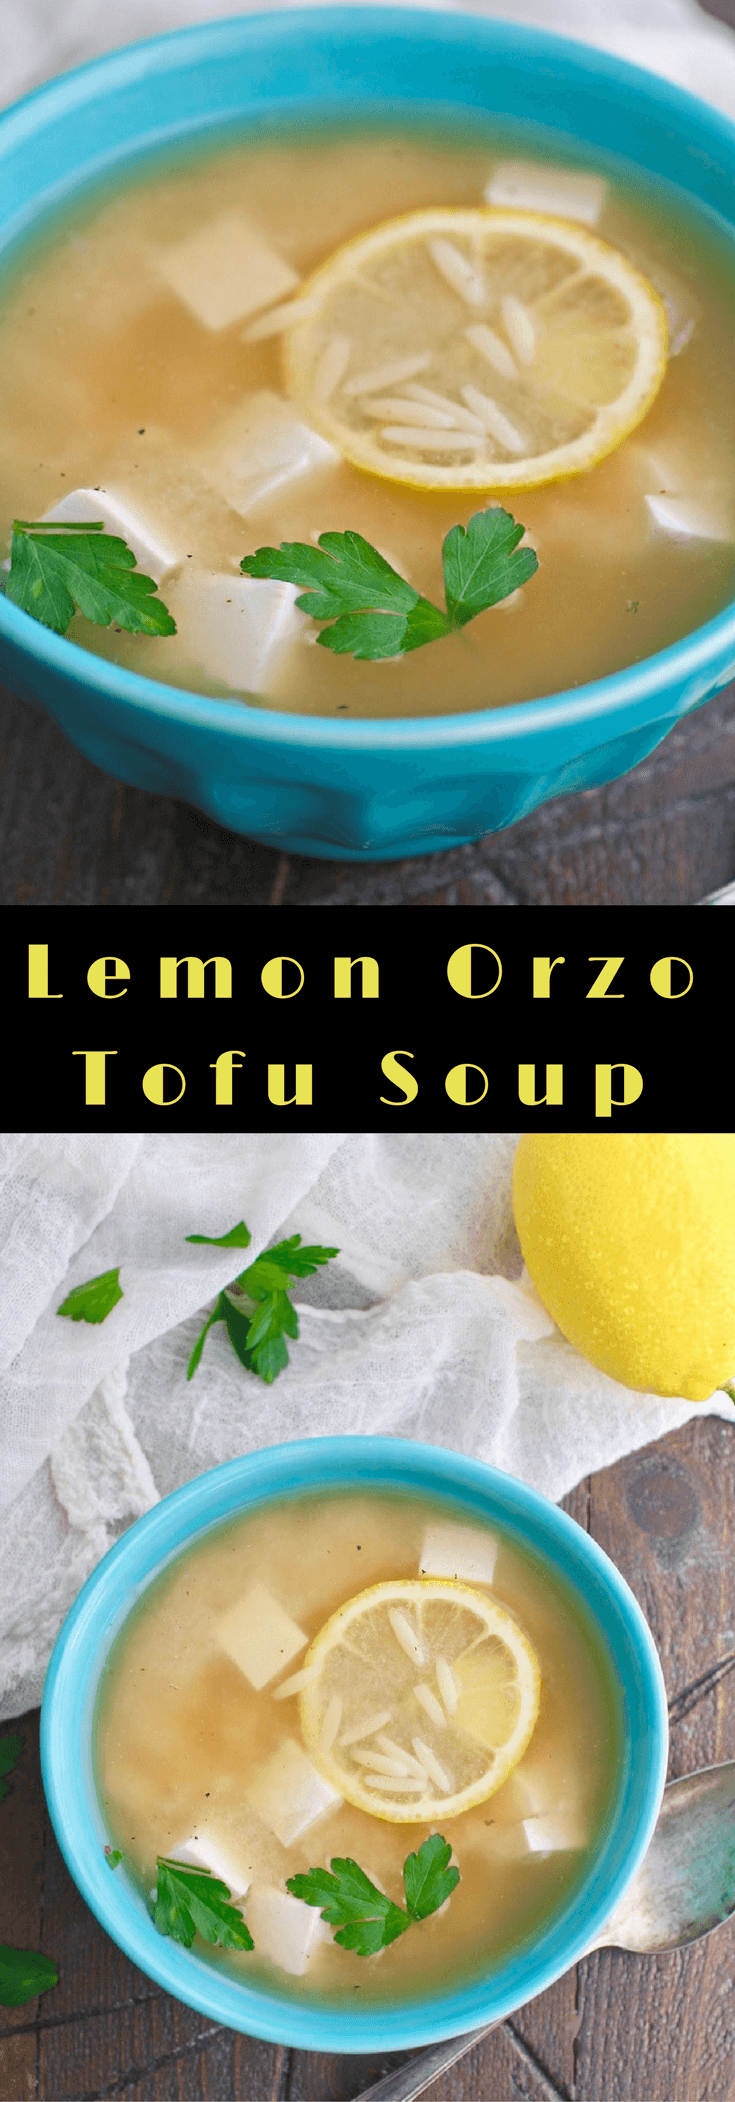 Lemon Orzo Tofu Soup is fun for a fresh dish. You'll love the flavors!